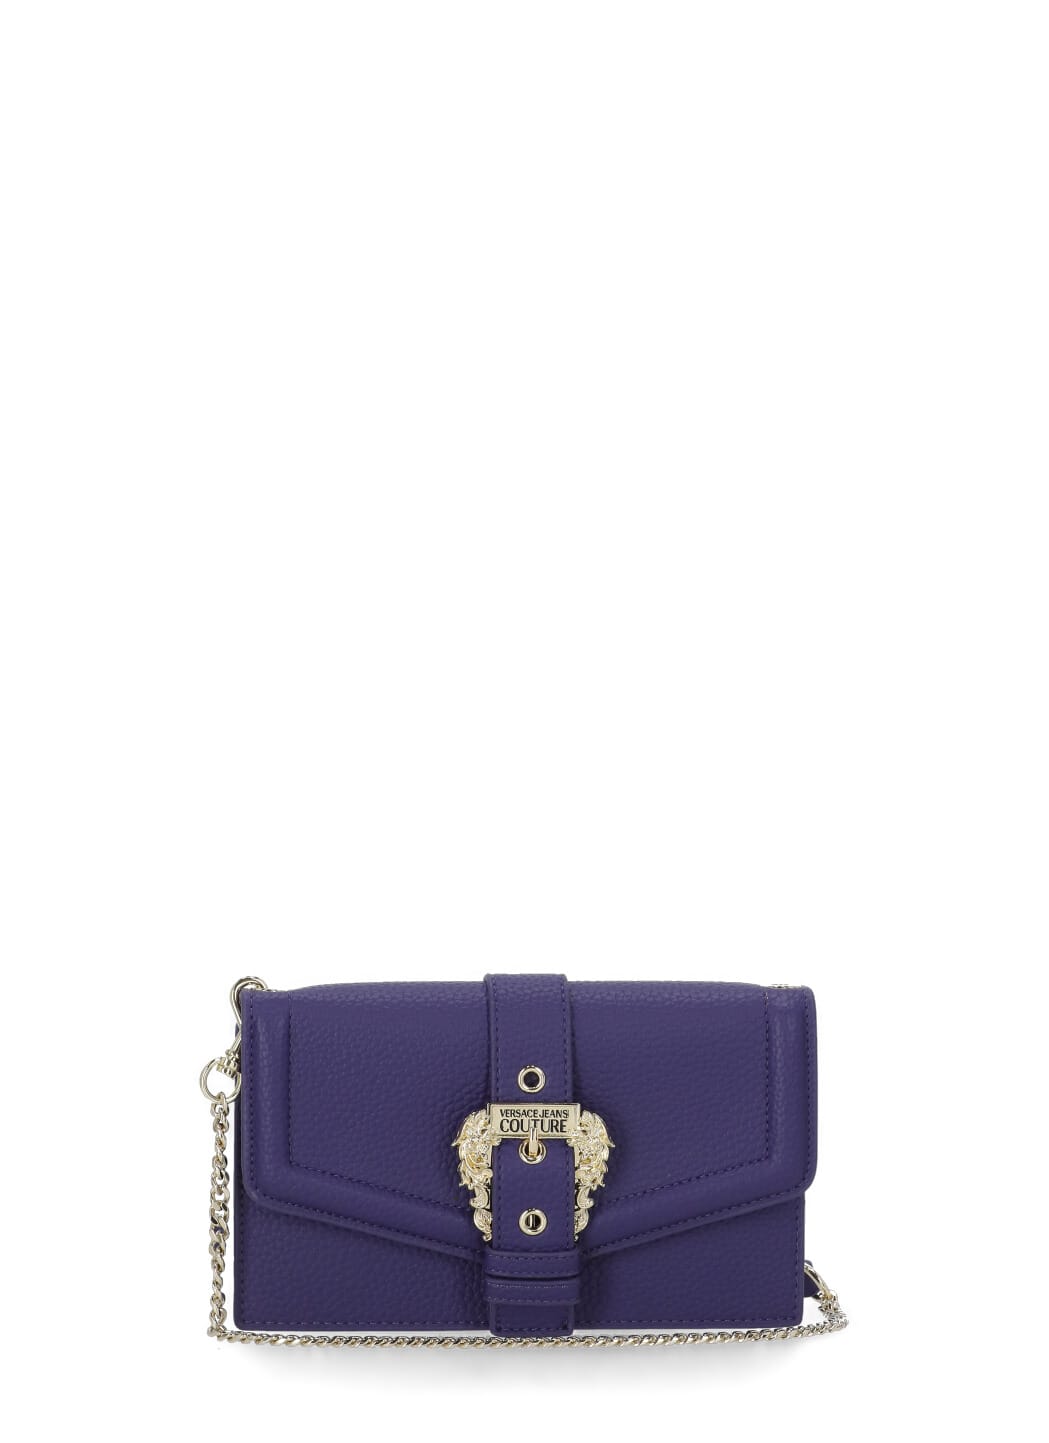 Versace Jeans Couture Couture Pochette In Purple